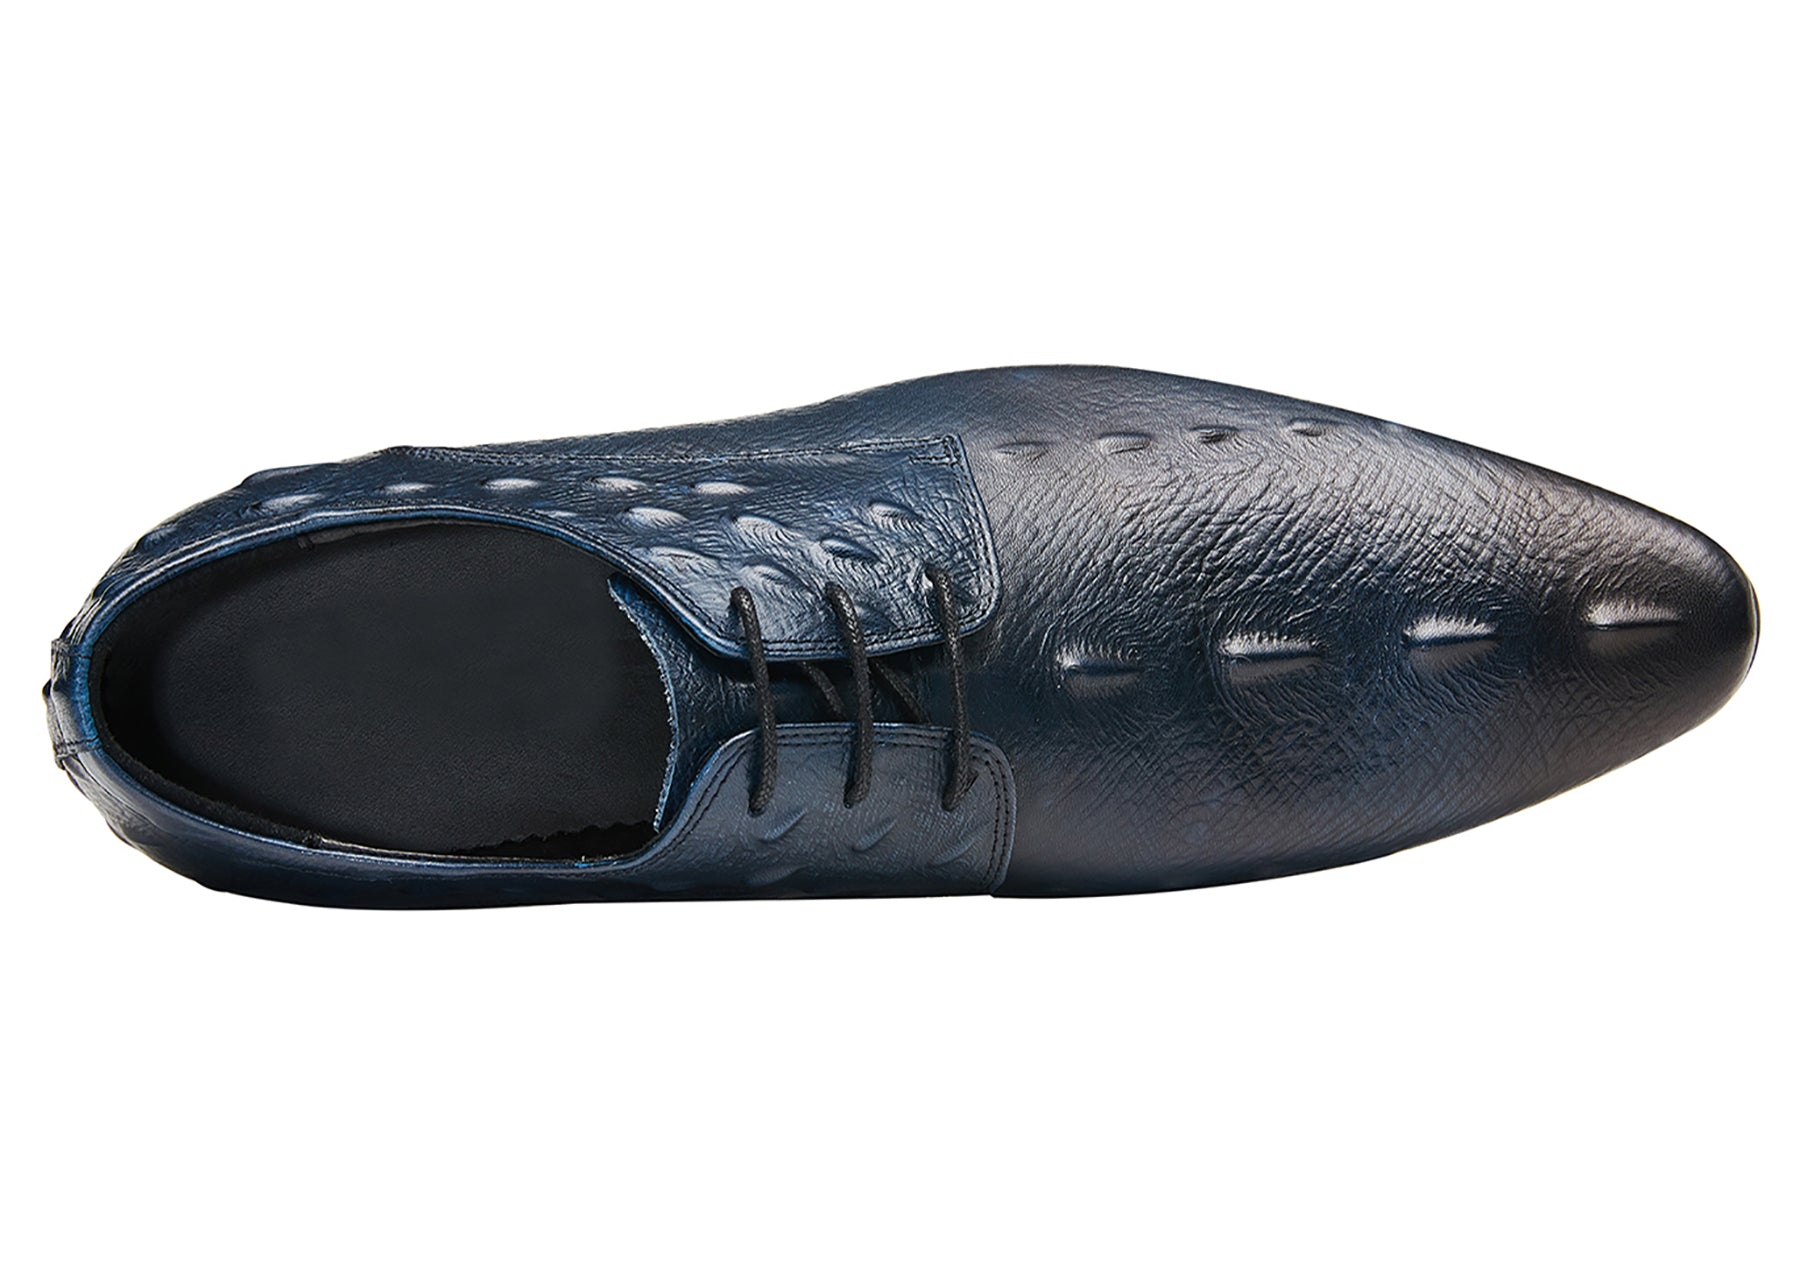 Men's Alligator Pointed Toe Derby Shoes